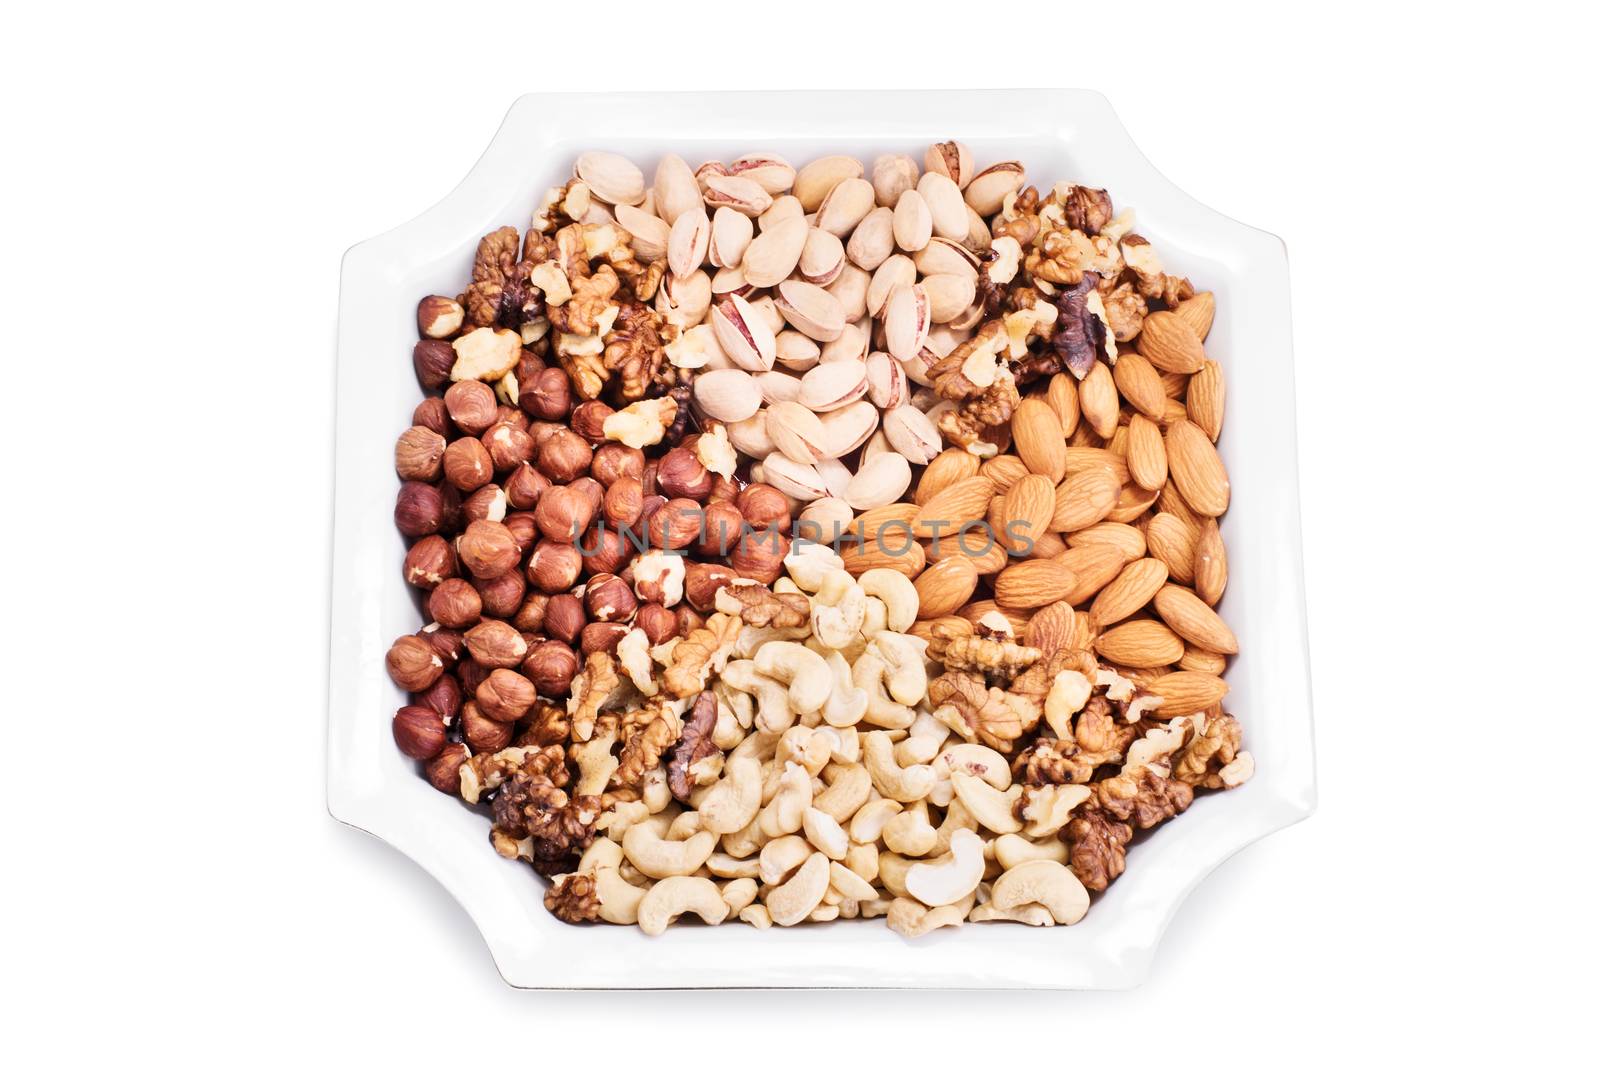 Almonds, hazelnuts, walnuts, cashews and pistachios on a plate by Mendelex